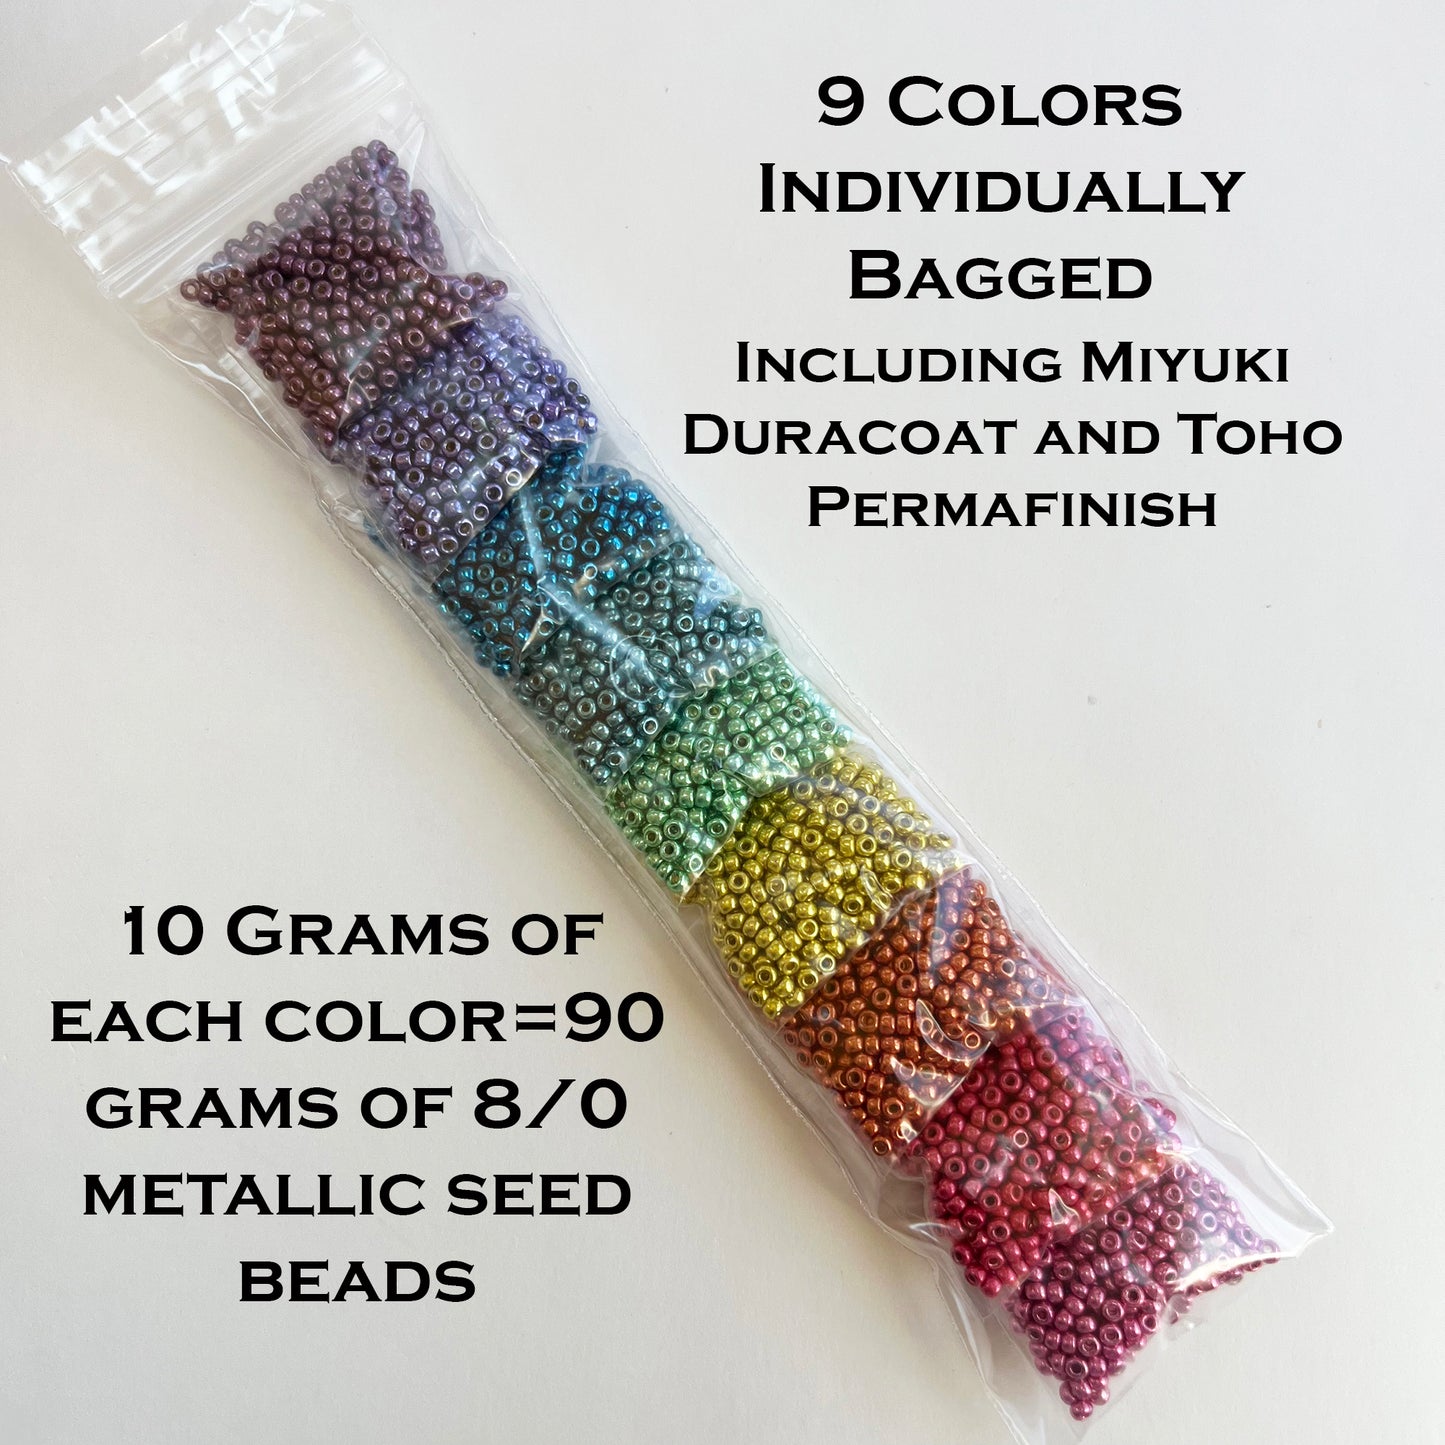 Metallic Rainbow Seed Bead Sampler Set size 8/0